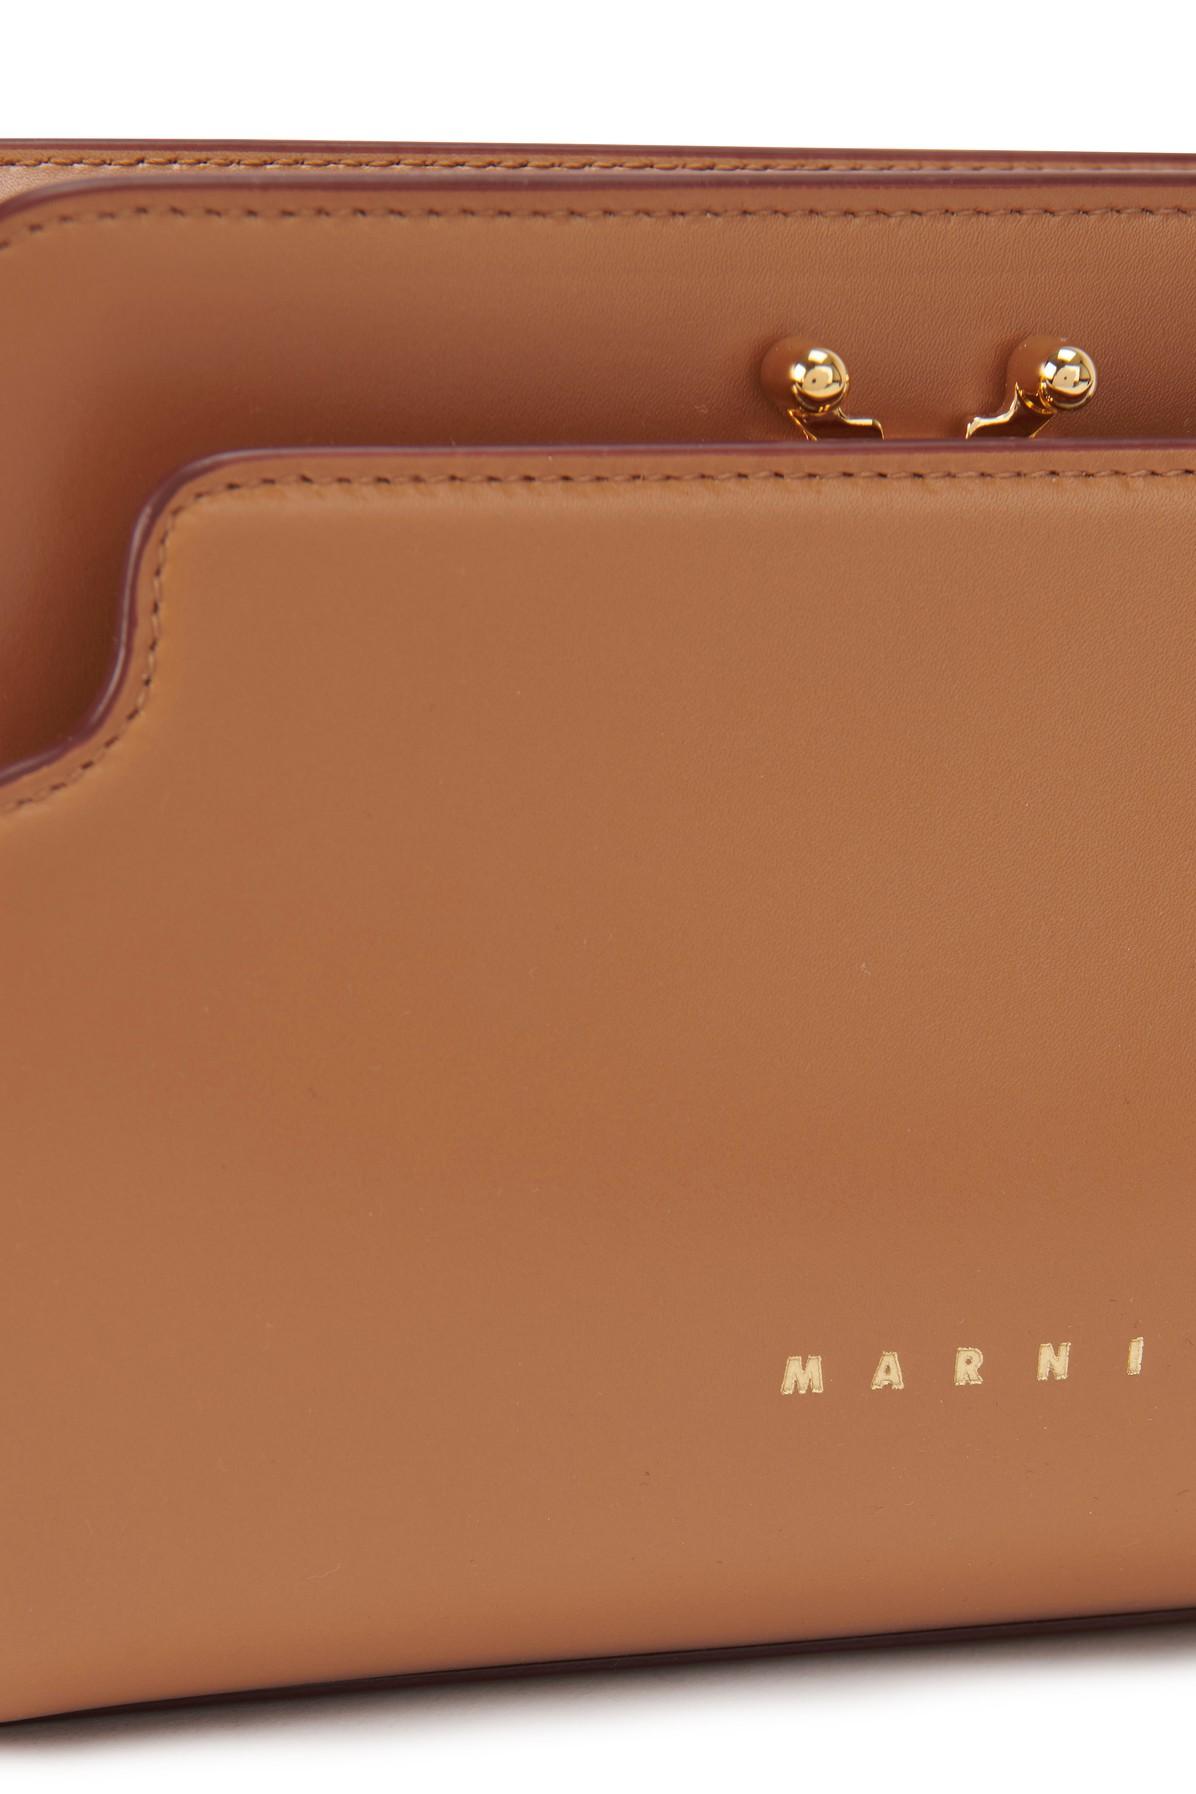 Marni Trunk Reverse Shoulder Bag in Brown | Lyst